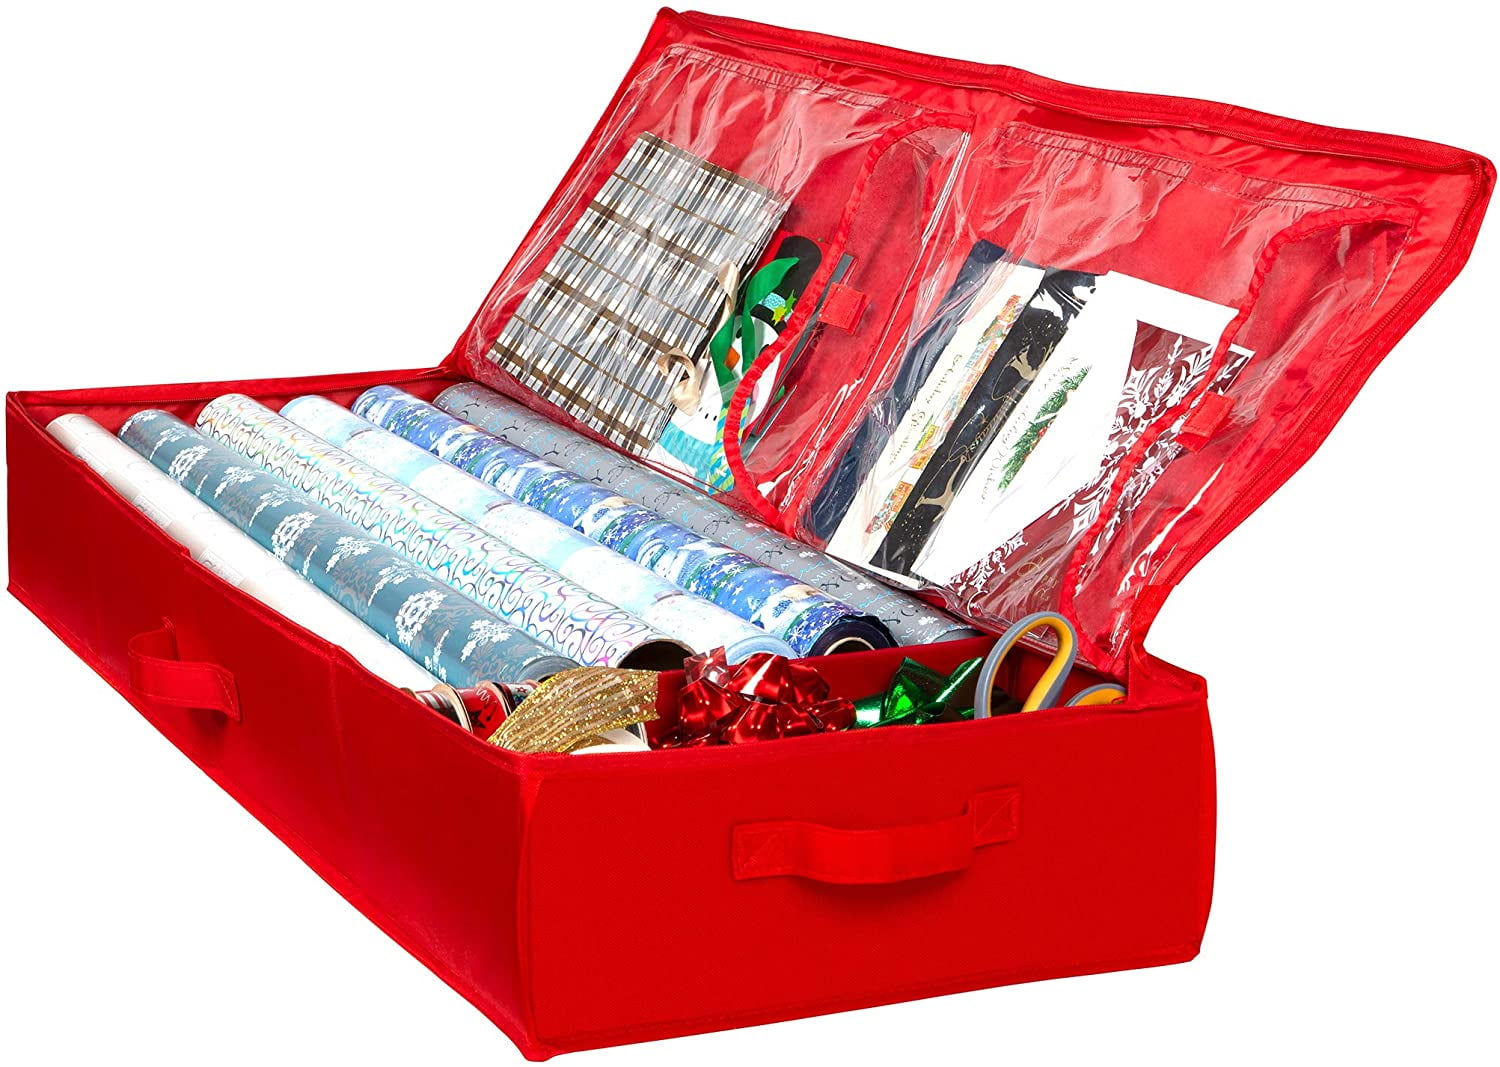 1pc Thickened Gift Wrap Storage Organizer - Easily organize